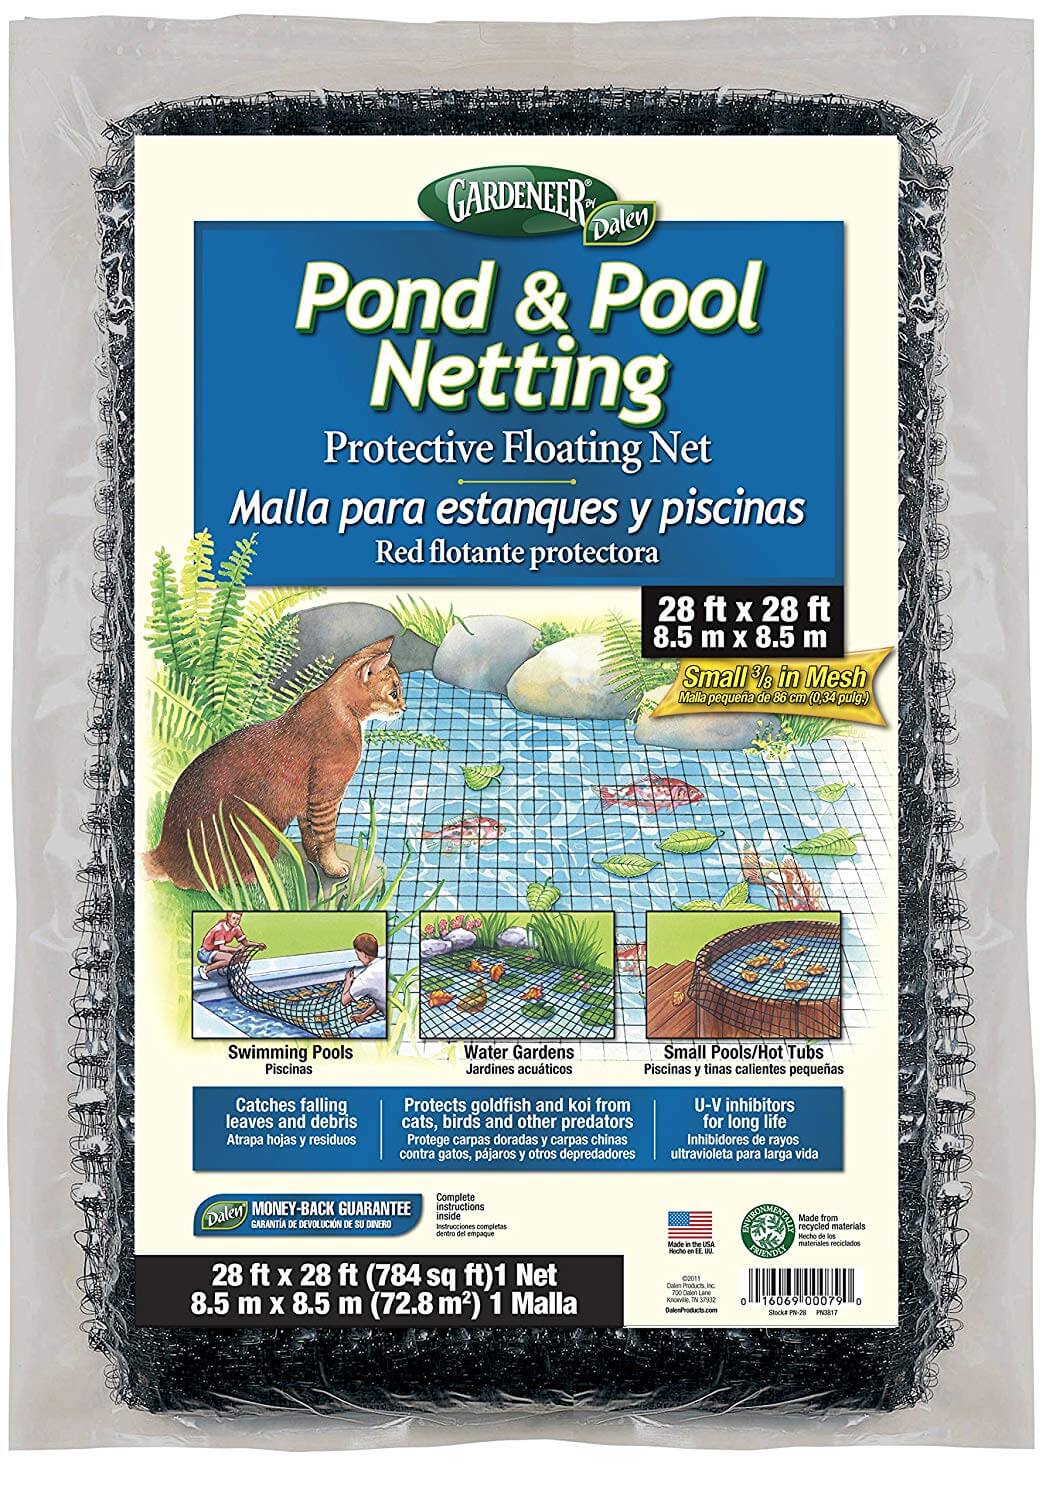 https://www.pondmarket.com/wp-content/uploads/pond-and-pool-netting.jpg